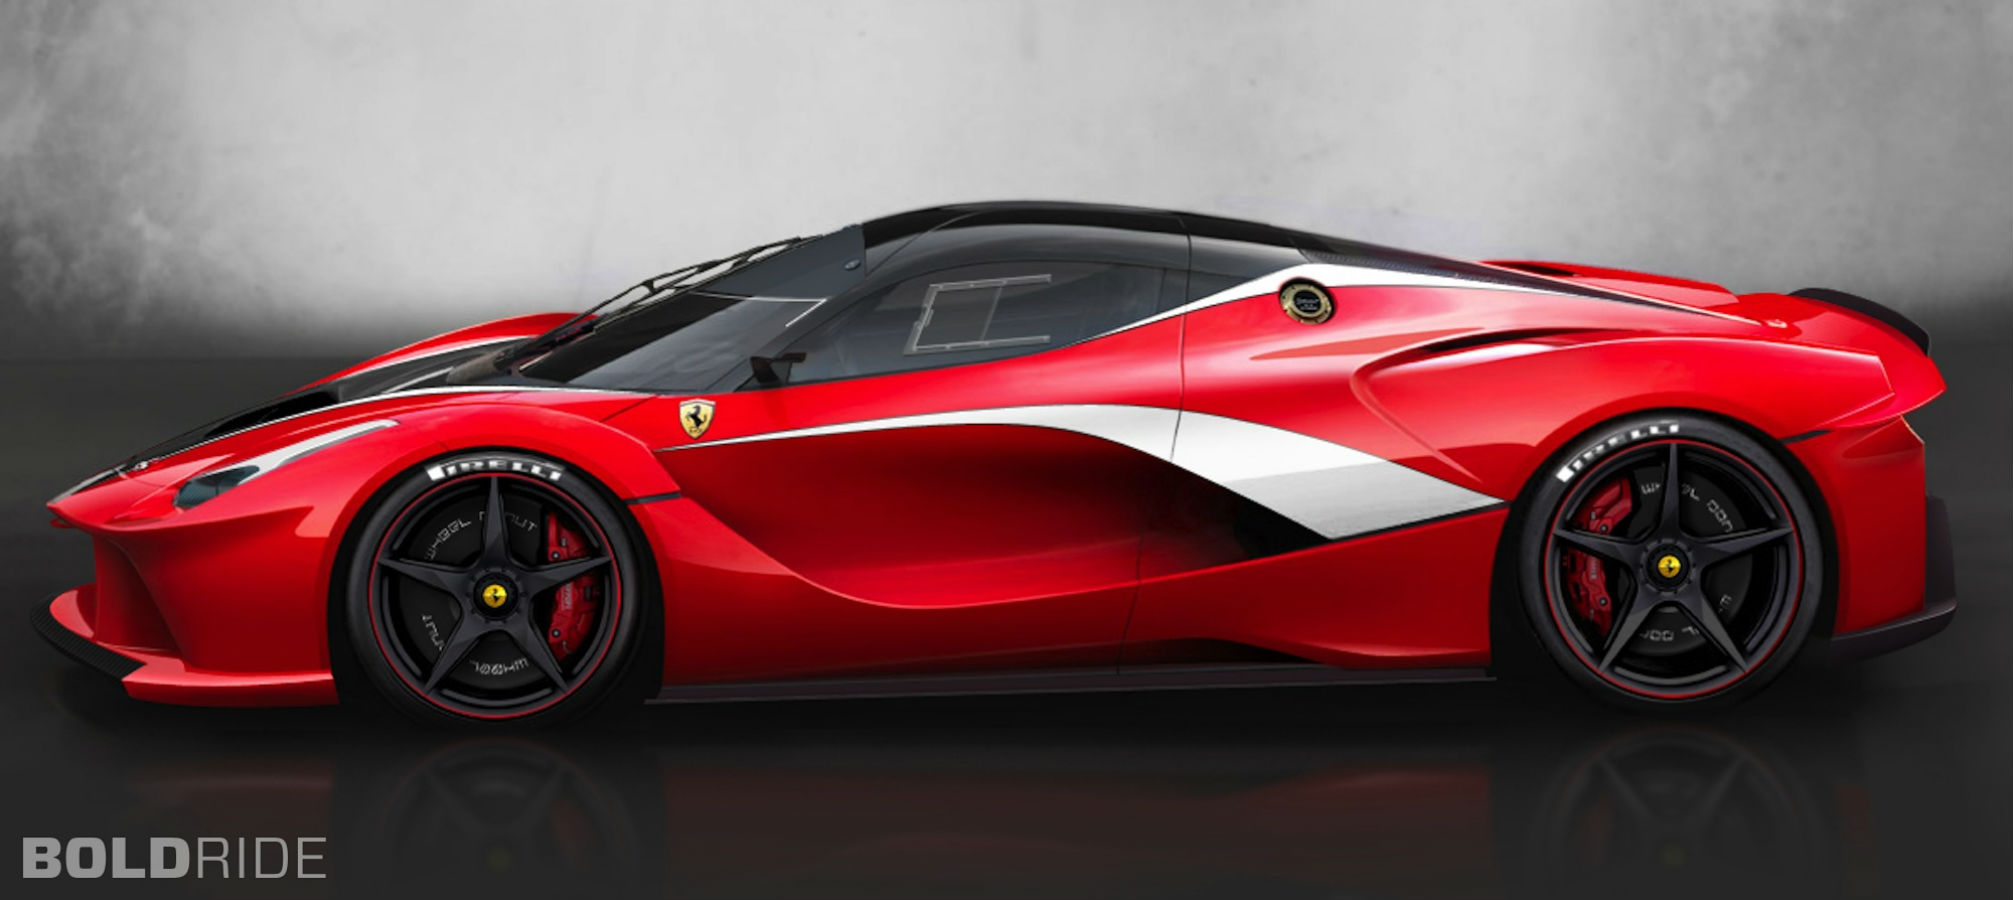 Ferrari Laferrari Xfx Concept Supercar H Wallpaper Background